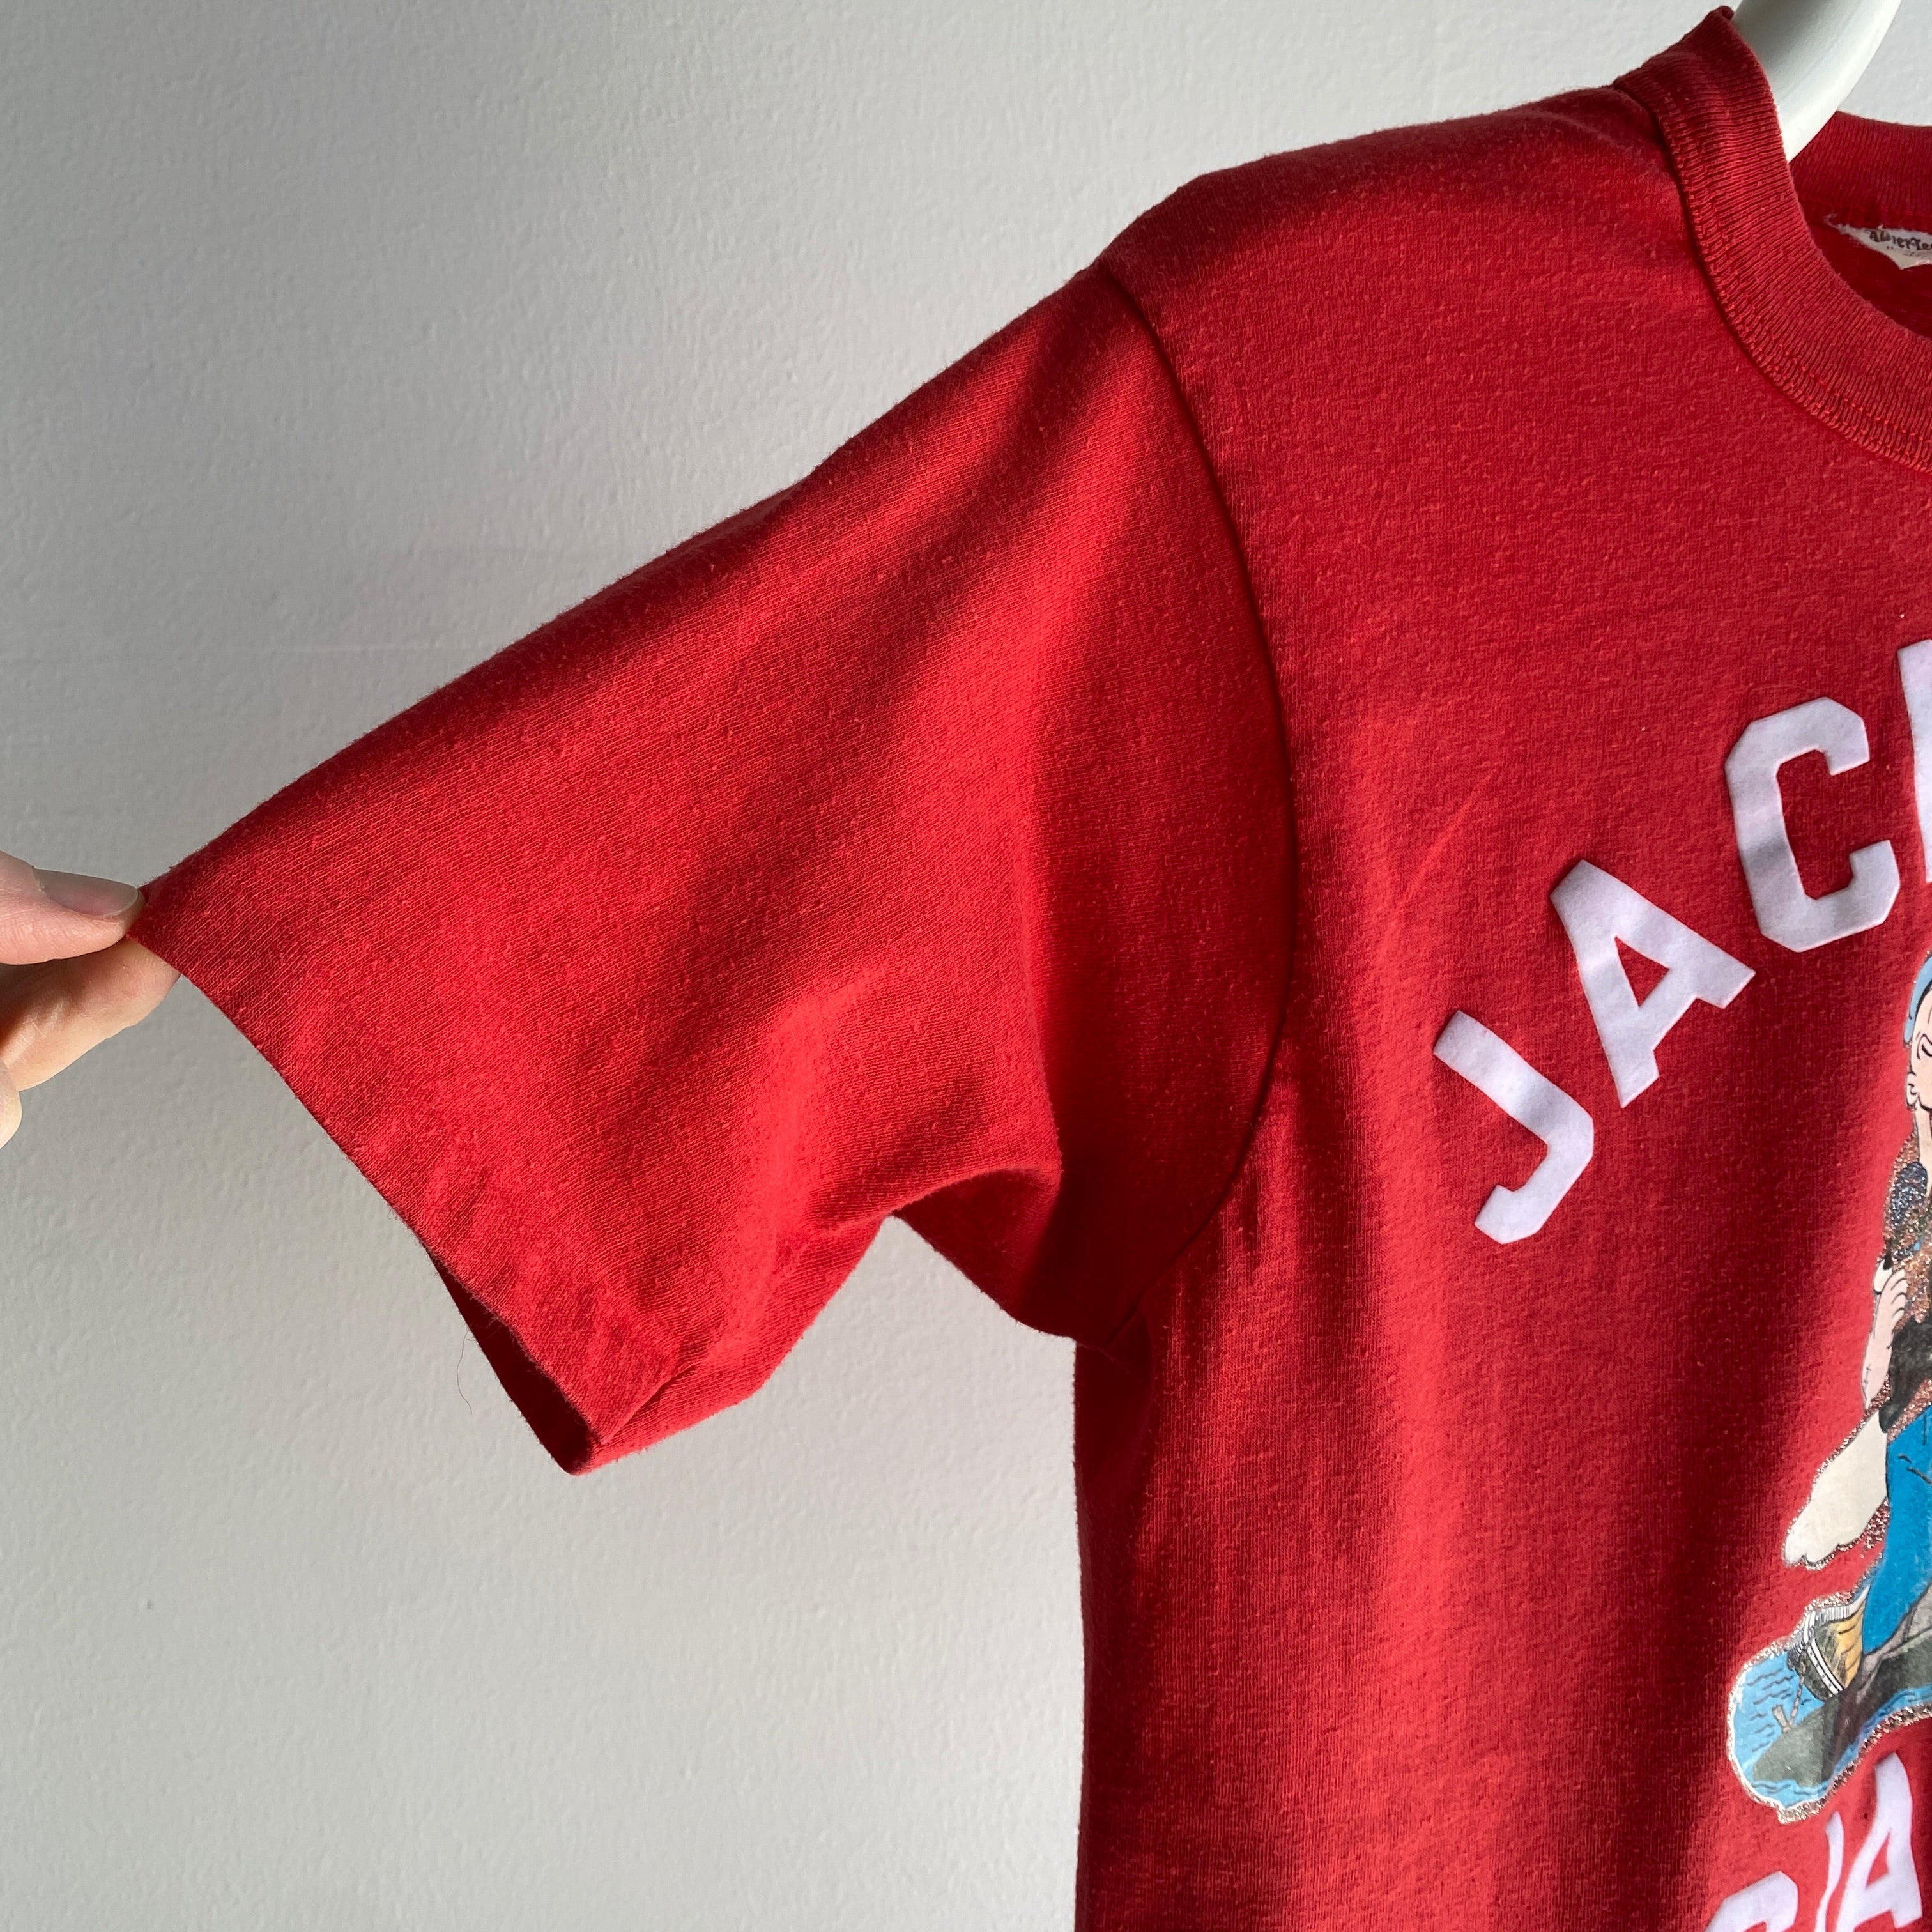 1979 Weird Popeye DIY Jack The Giant Killer T-Shirt